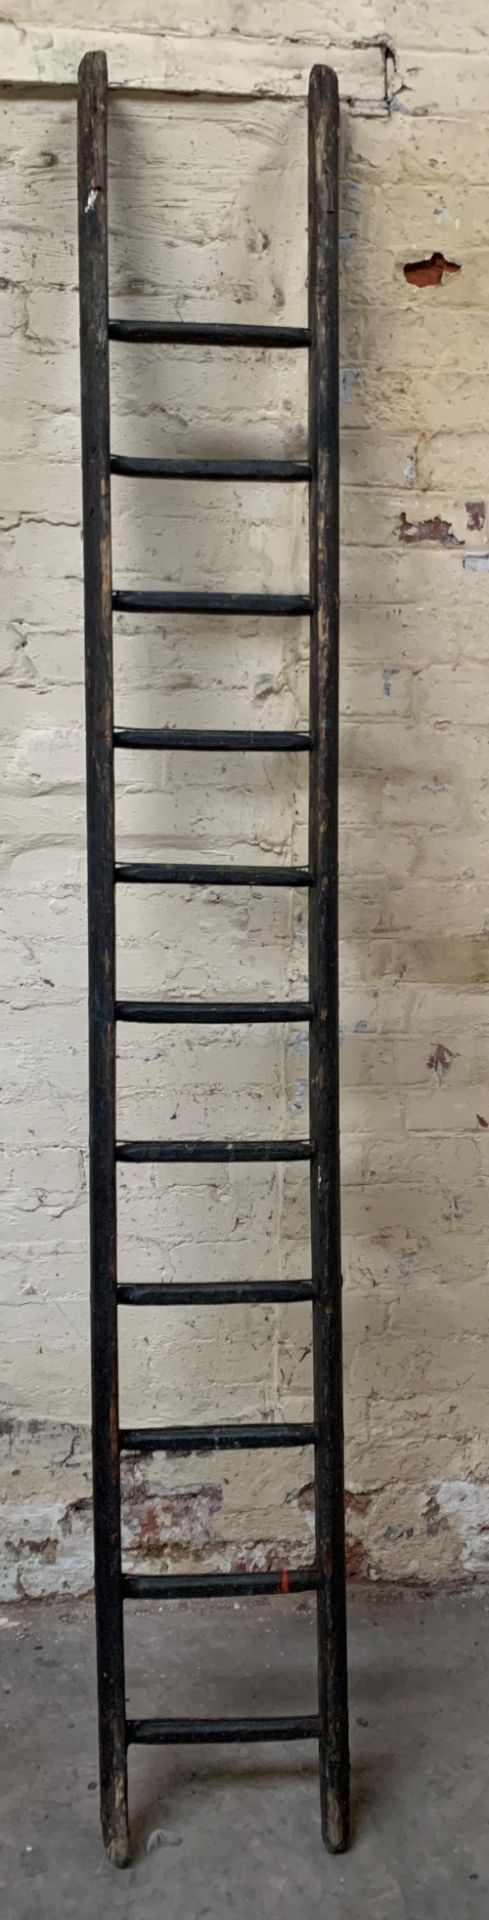 An eleven rung wooden ladder - Image 3 of 3